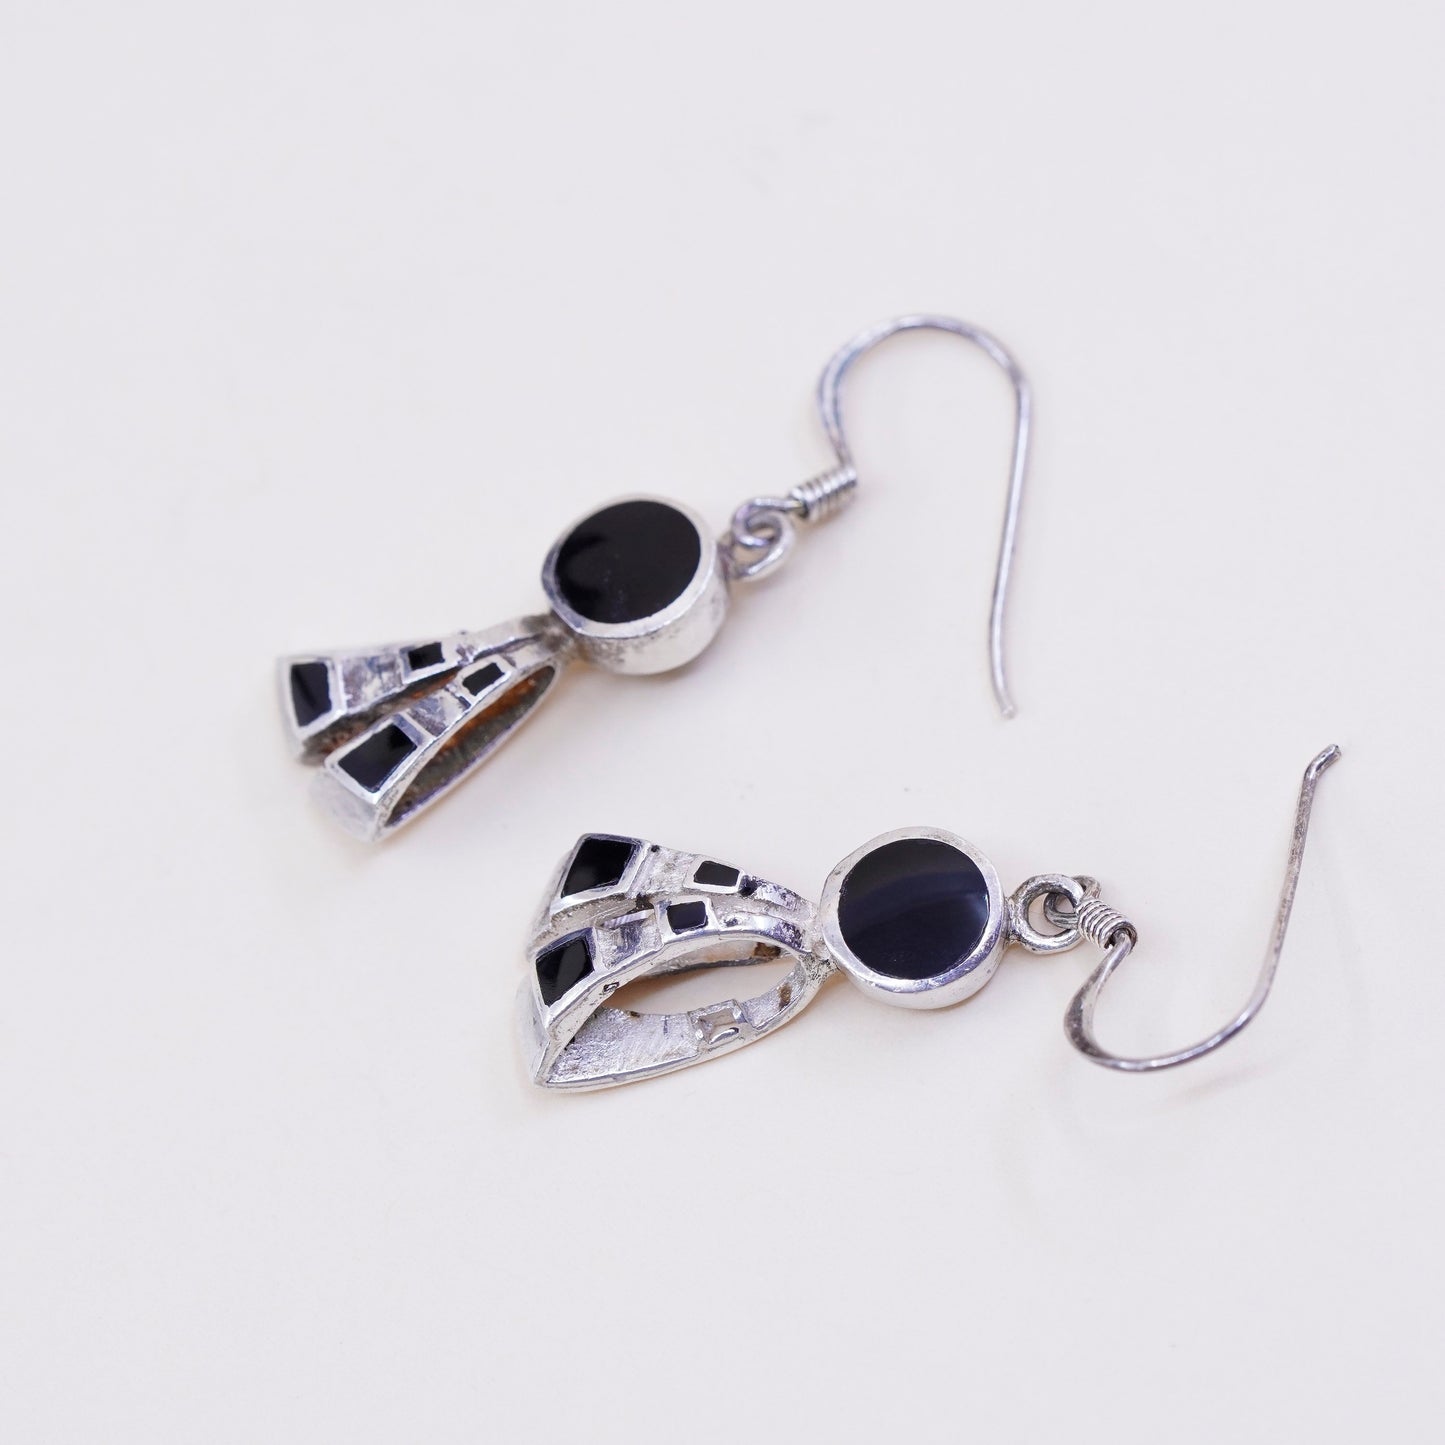 Vintage Sterling 925 silver handmade earrings w/ round obsidian drops, elegant